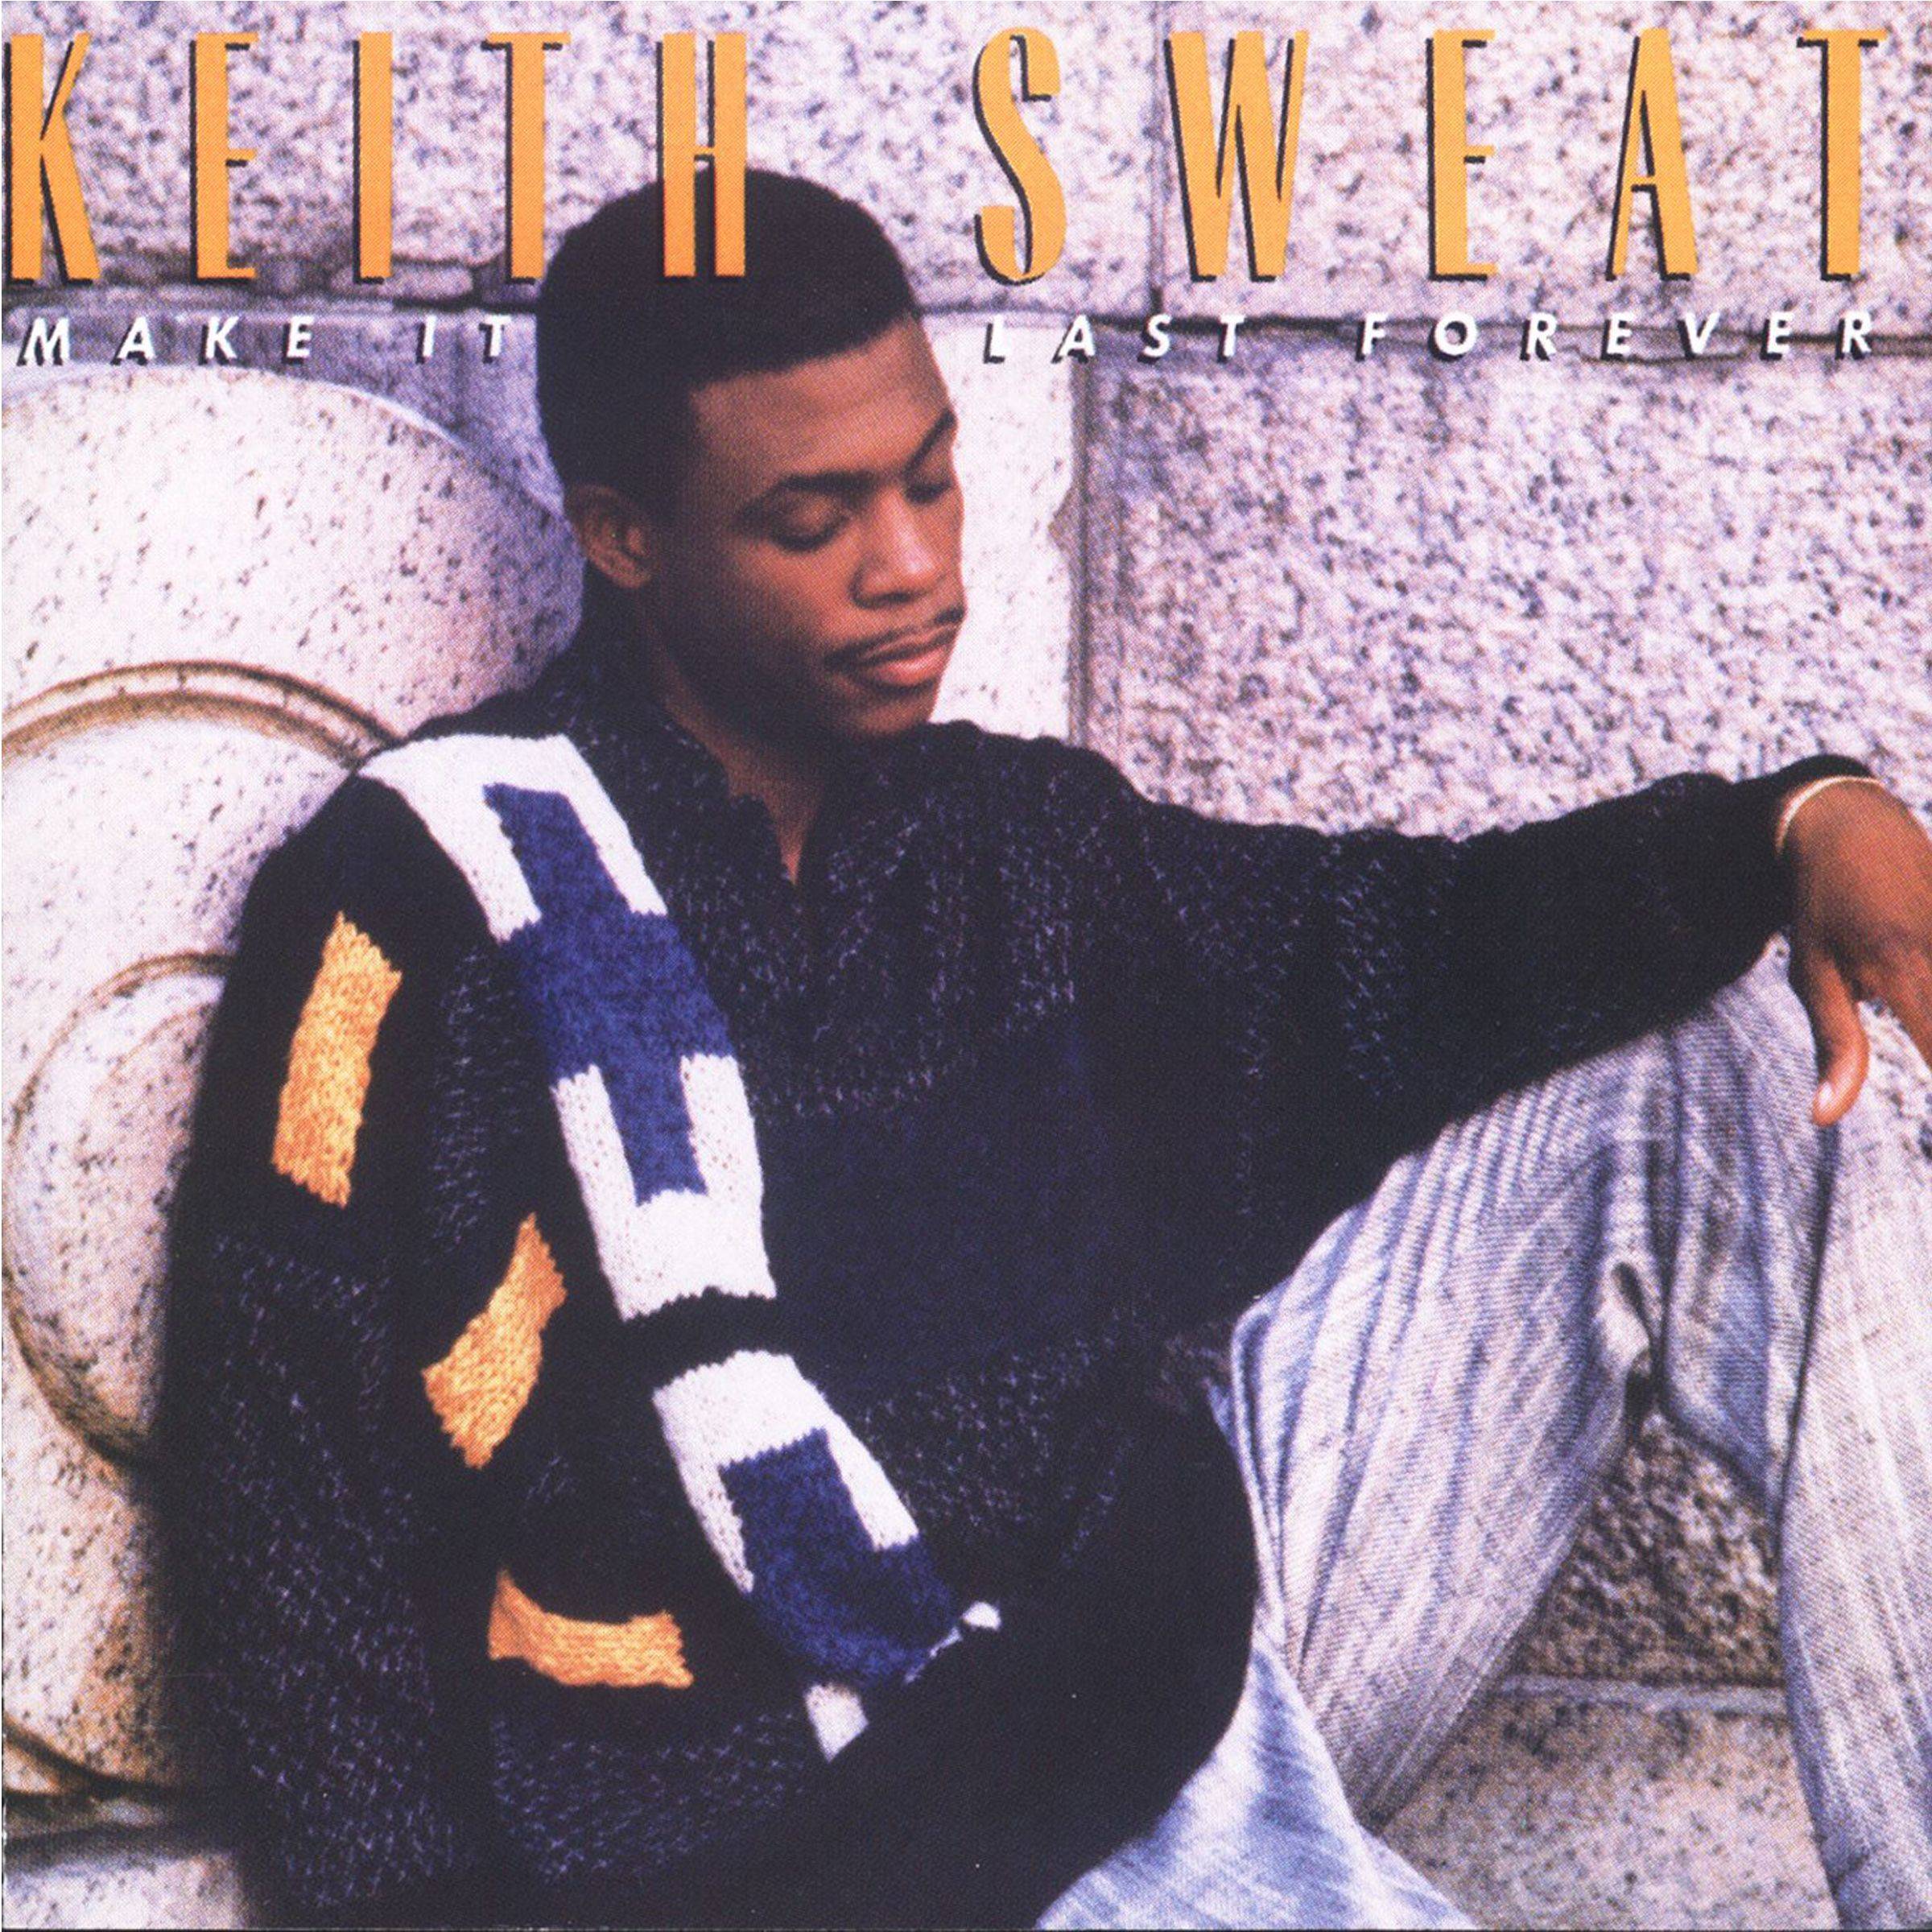 Keith Sweat – Make It Last Forever (1987/2016) [AcousticSounds FLAC 24bit/192kHz]